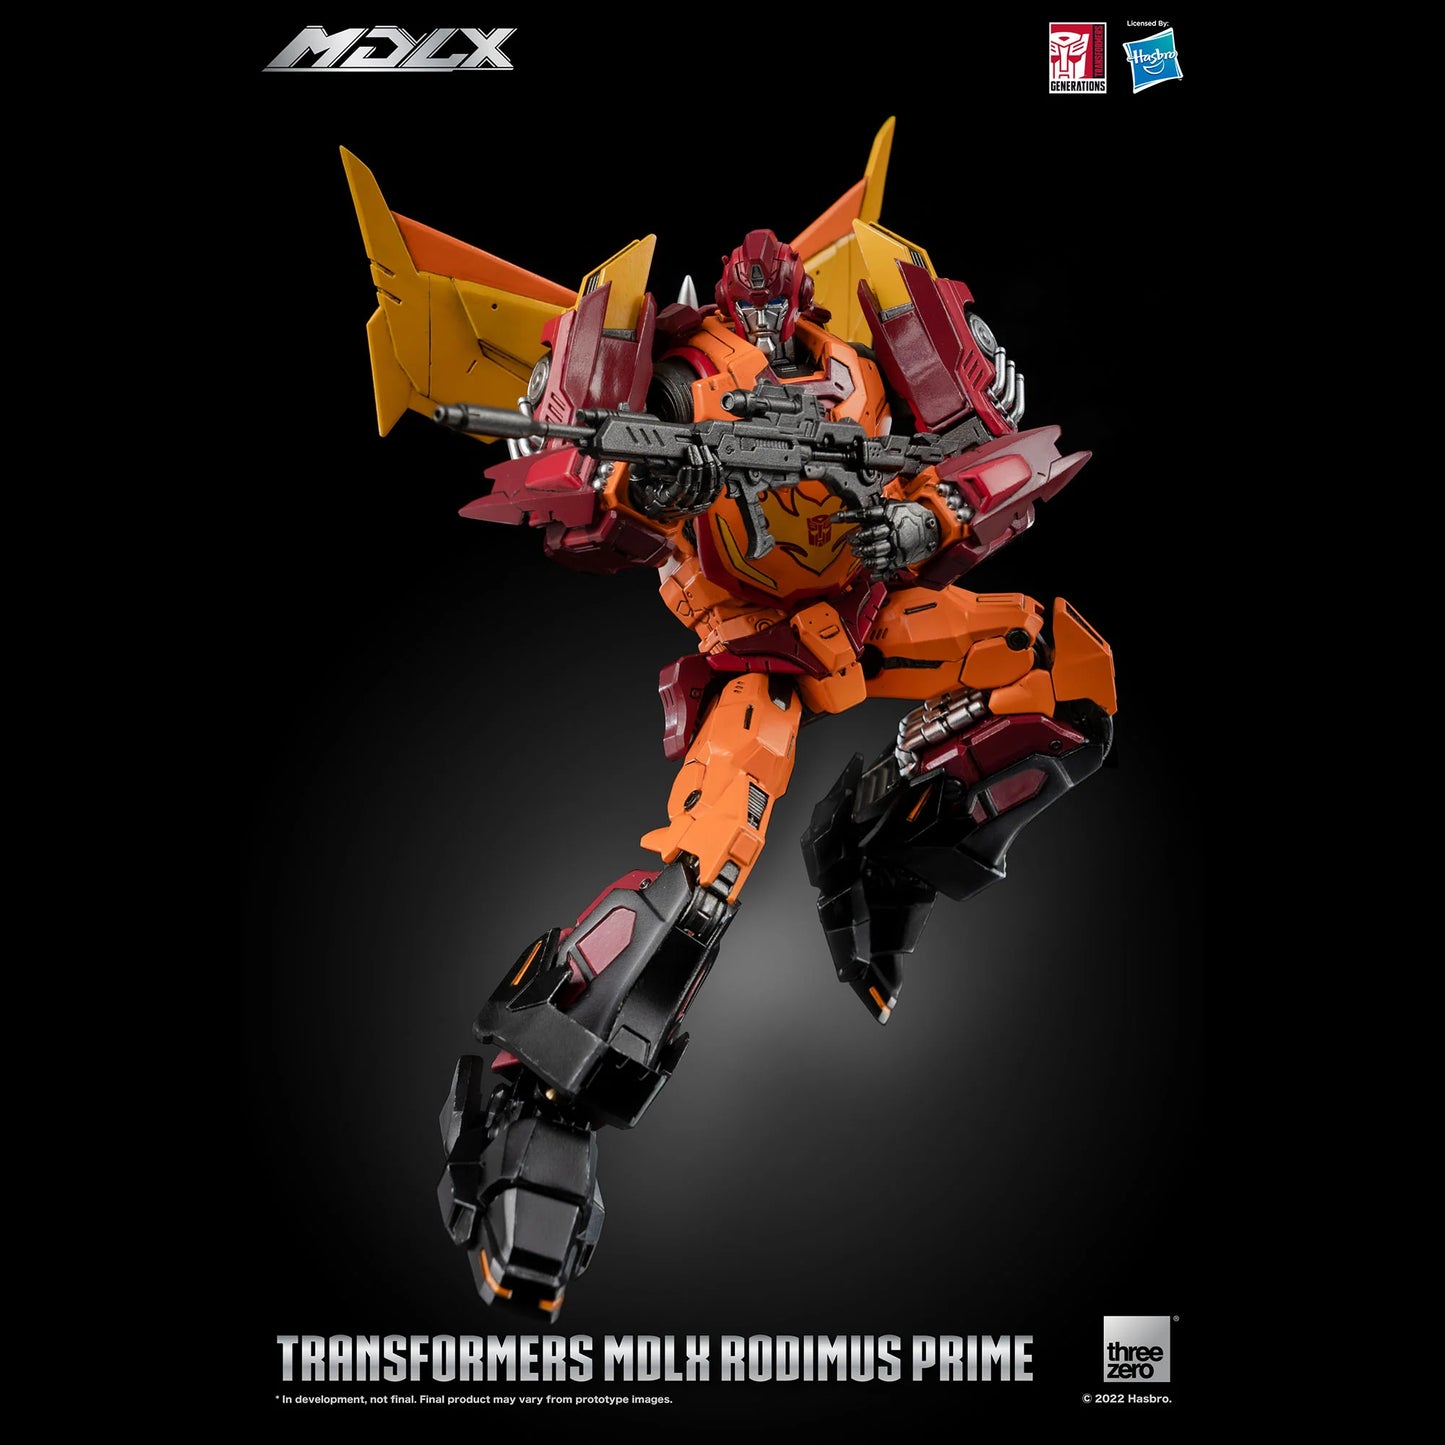 Transformers MDLX Rodimus Prime By Threezero